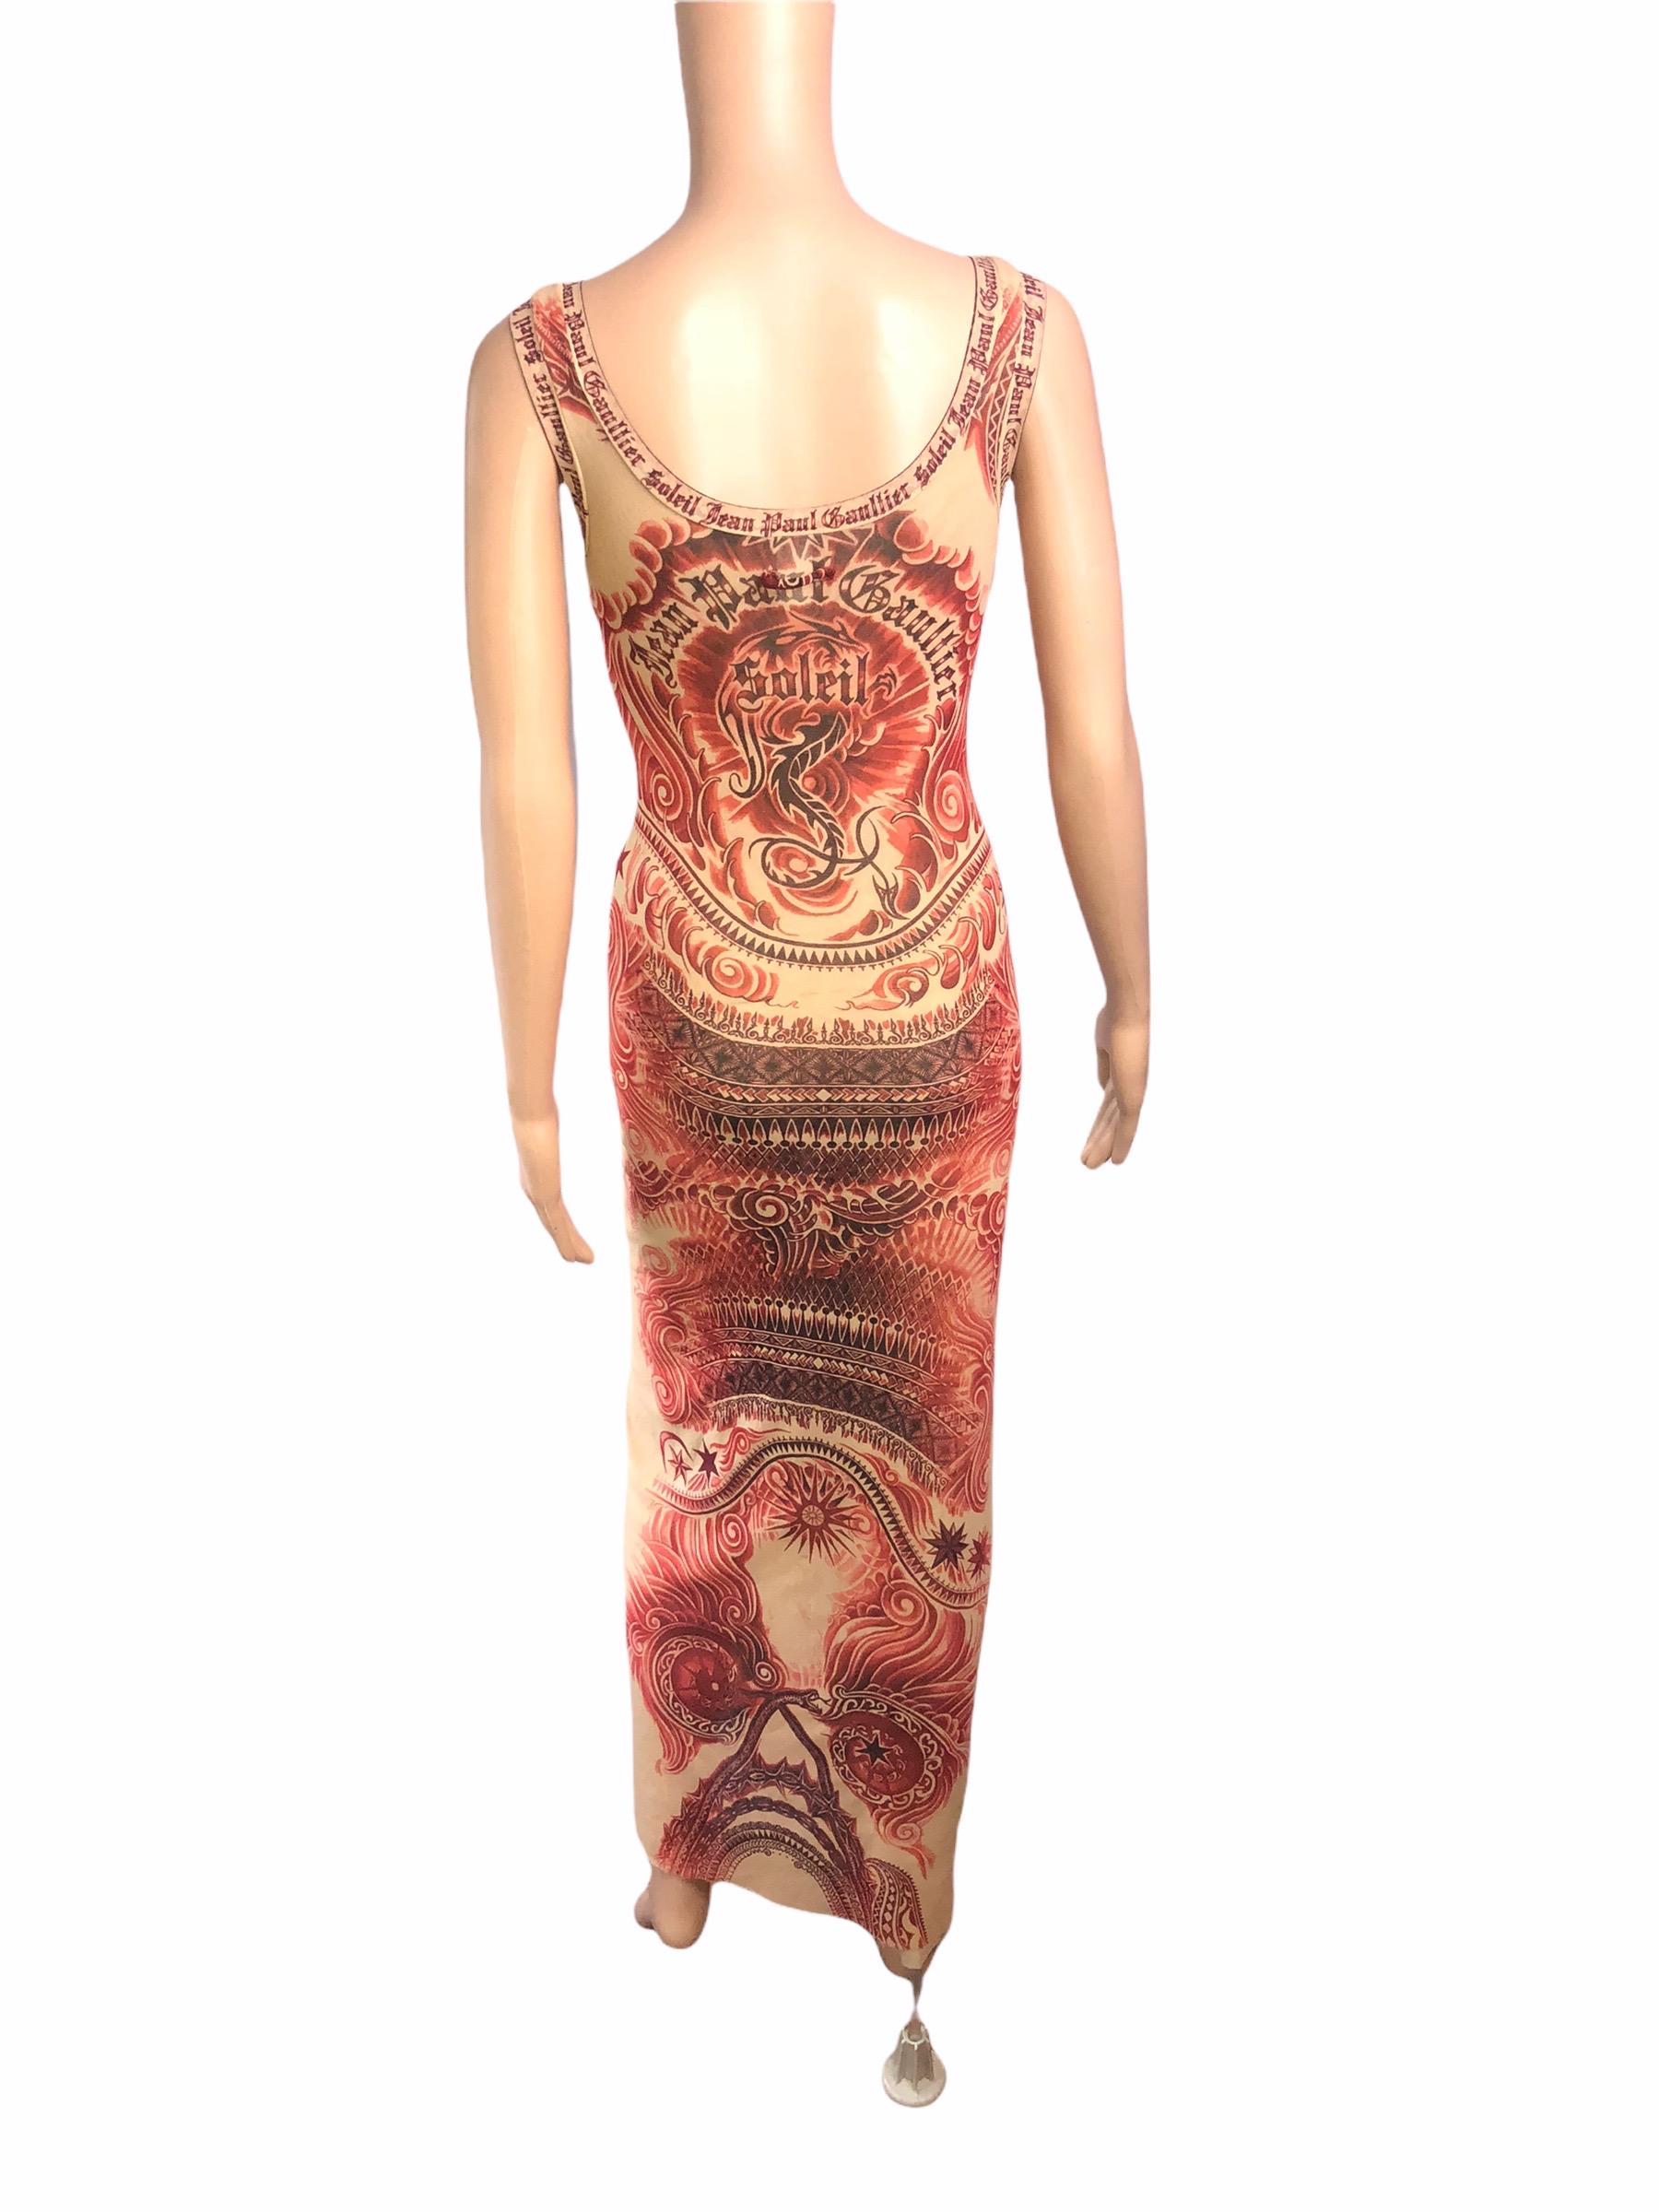 Jean Paul Gaultier Soleil Vintage Tattoo Bodycon Mesh Bolero Dress 2 Piece Set For Sale 4